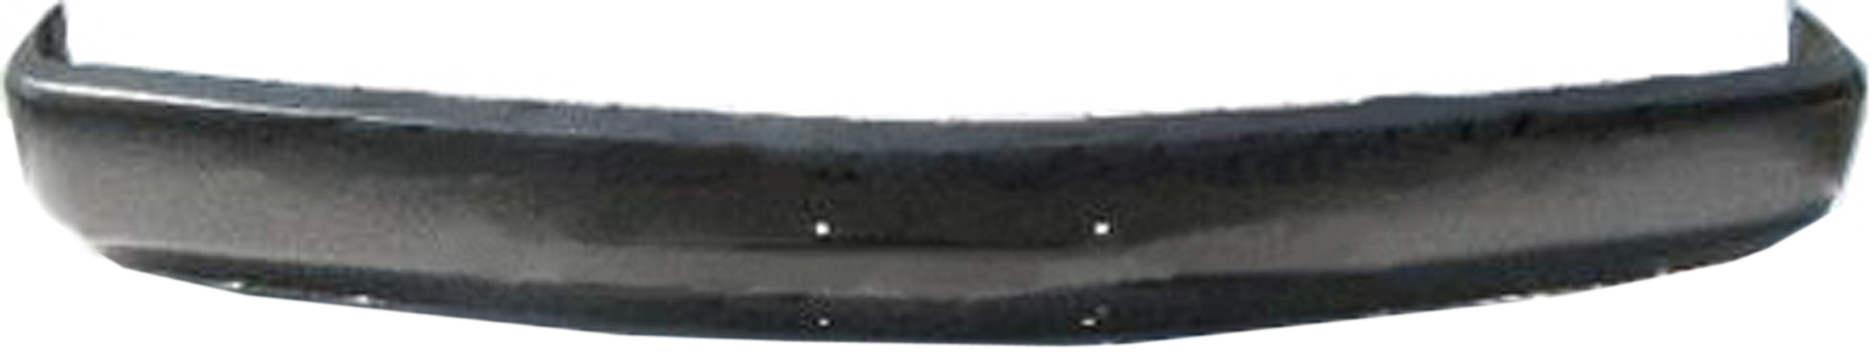 Aftermarket METAL FRONT BUMPERS for GMC - K3500, K3500,88-00,Front bumper face bar